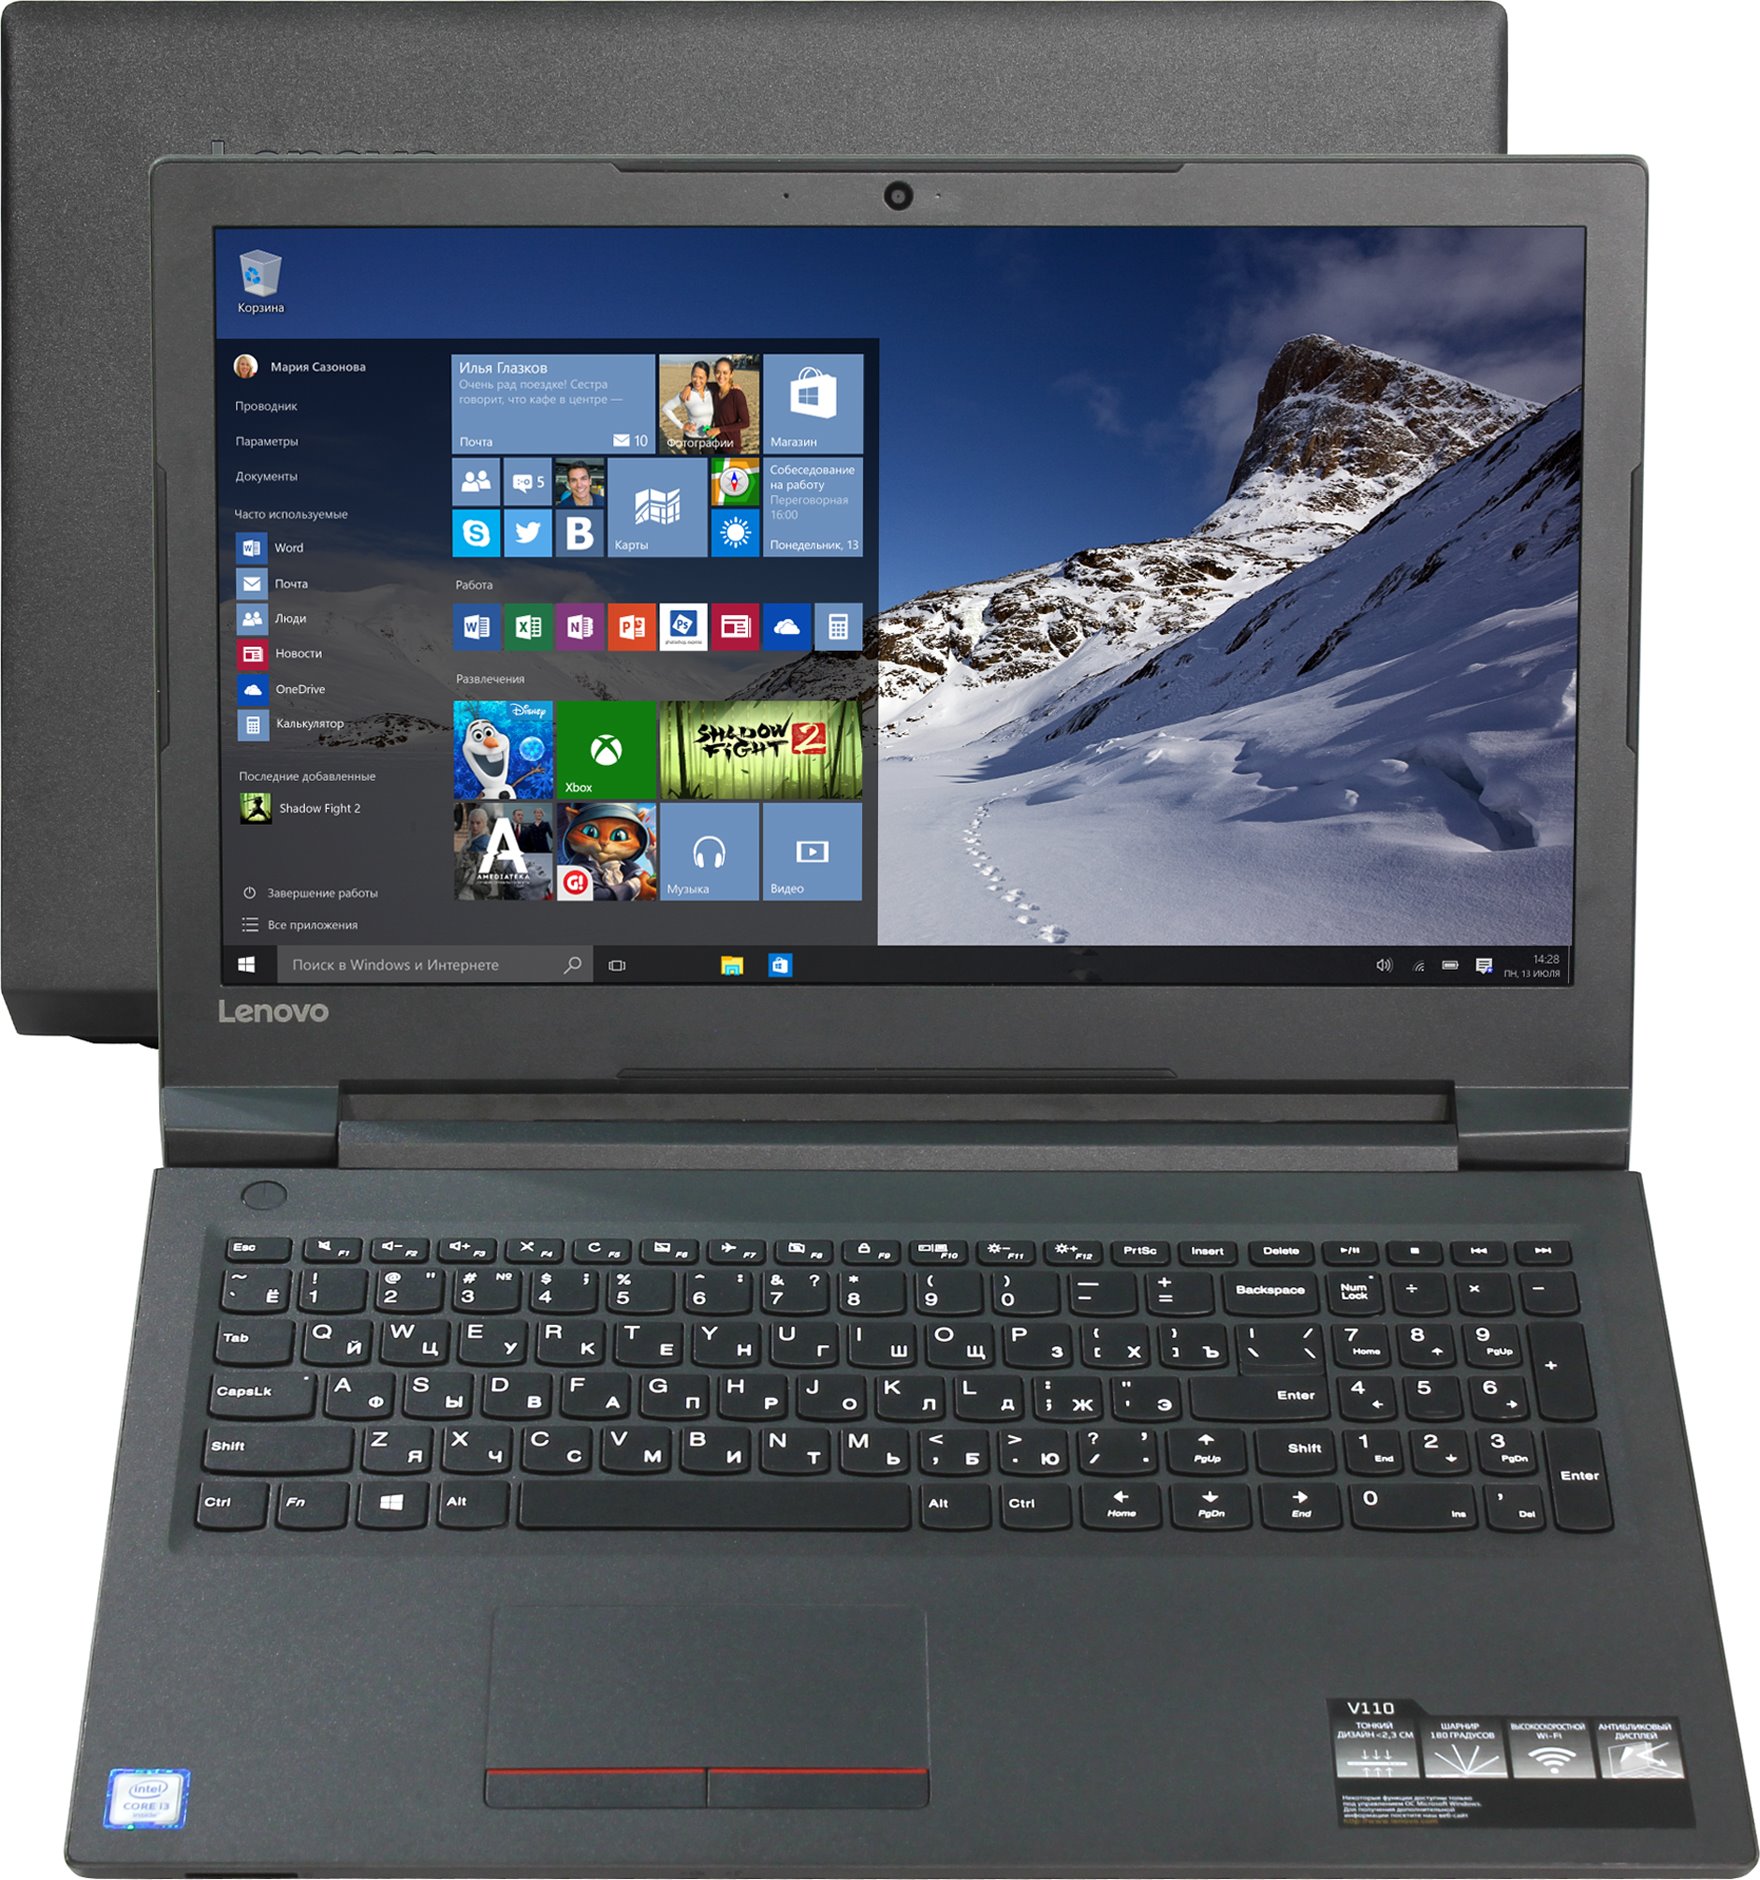 Ноутбук Lenovo V110-15, 15.6", Intel Pentium N4200, 1100 МГц, 4096 Мб, 500 Гб, Intel HD Graphics 505, Wi-Fi, Bluetooth, Cam, DOS, чёрный